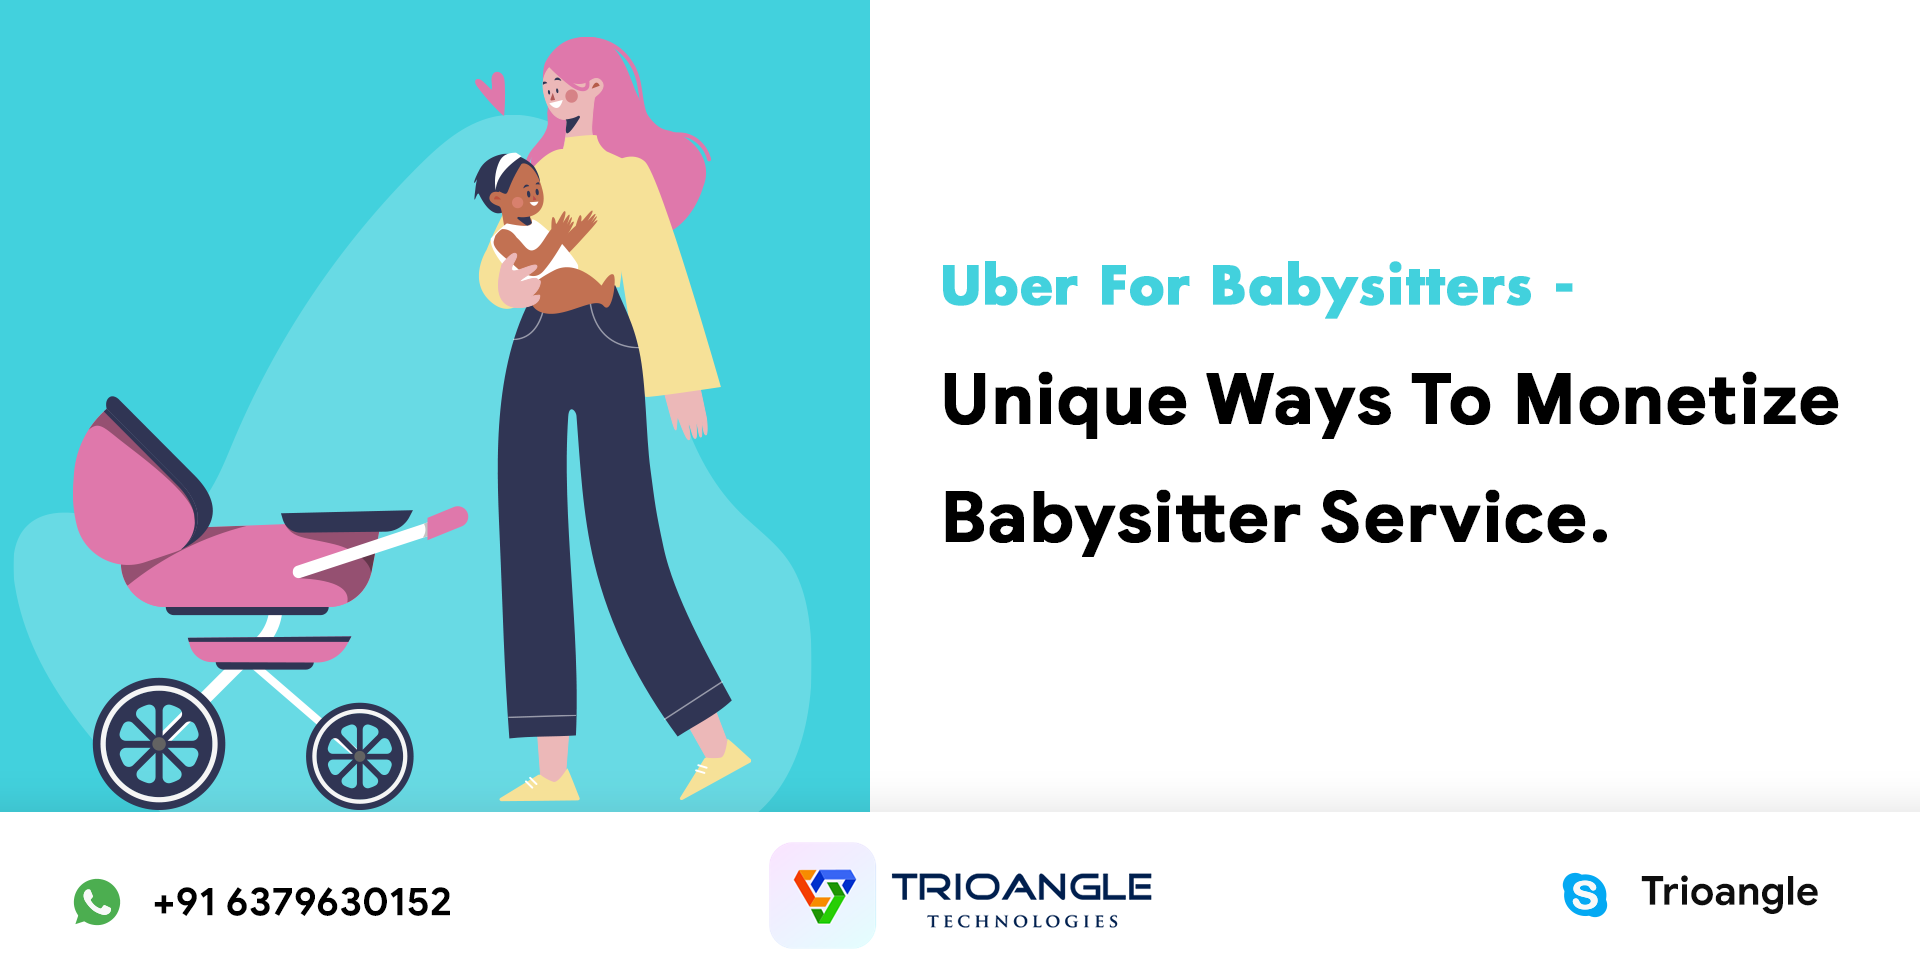 Uber For Babysitters - Unique Ways To Monetize Babysitter Service